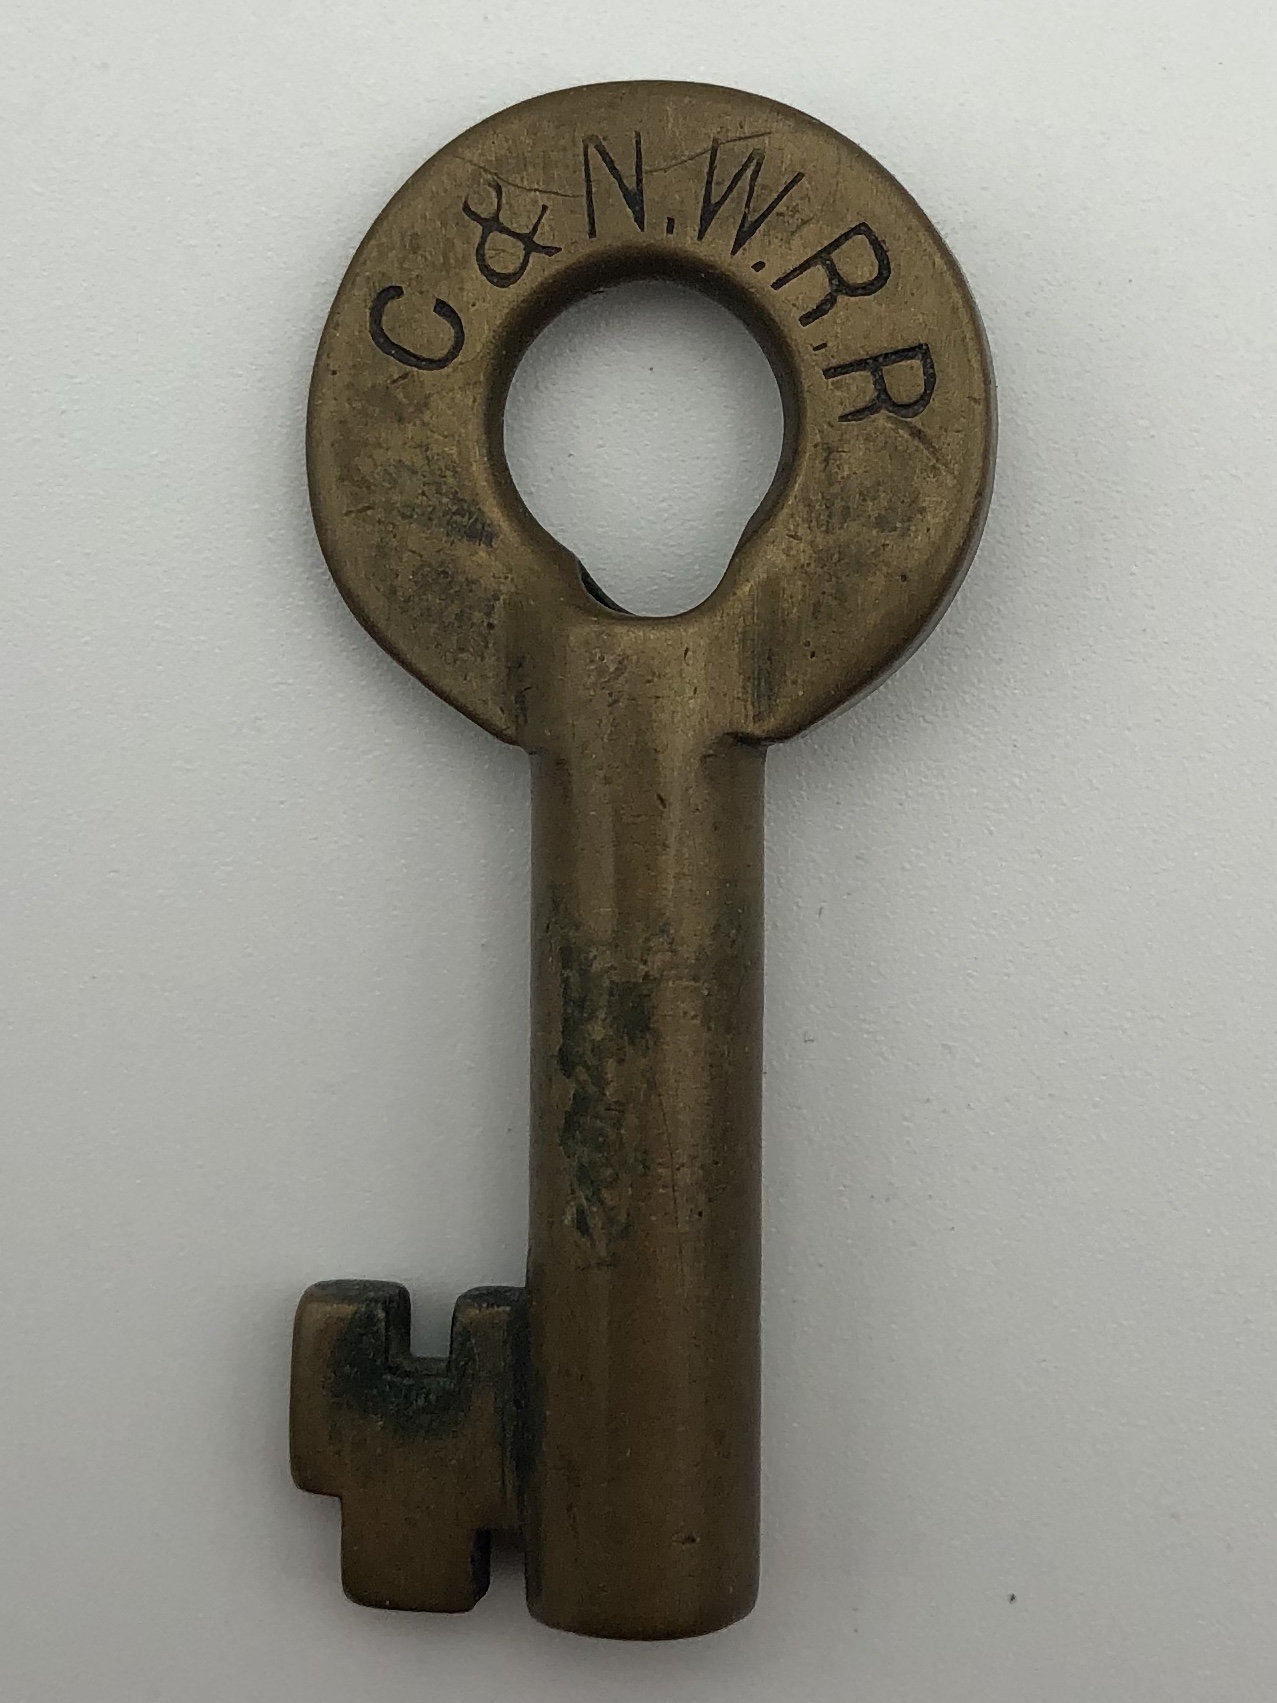 Antique Railroad Key